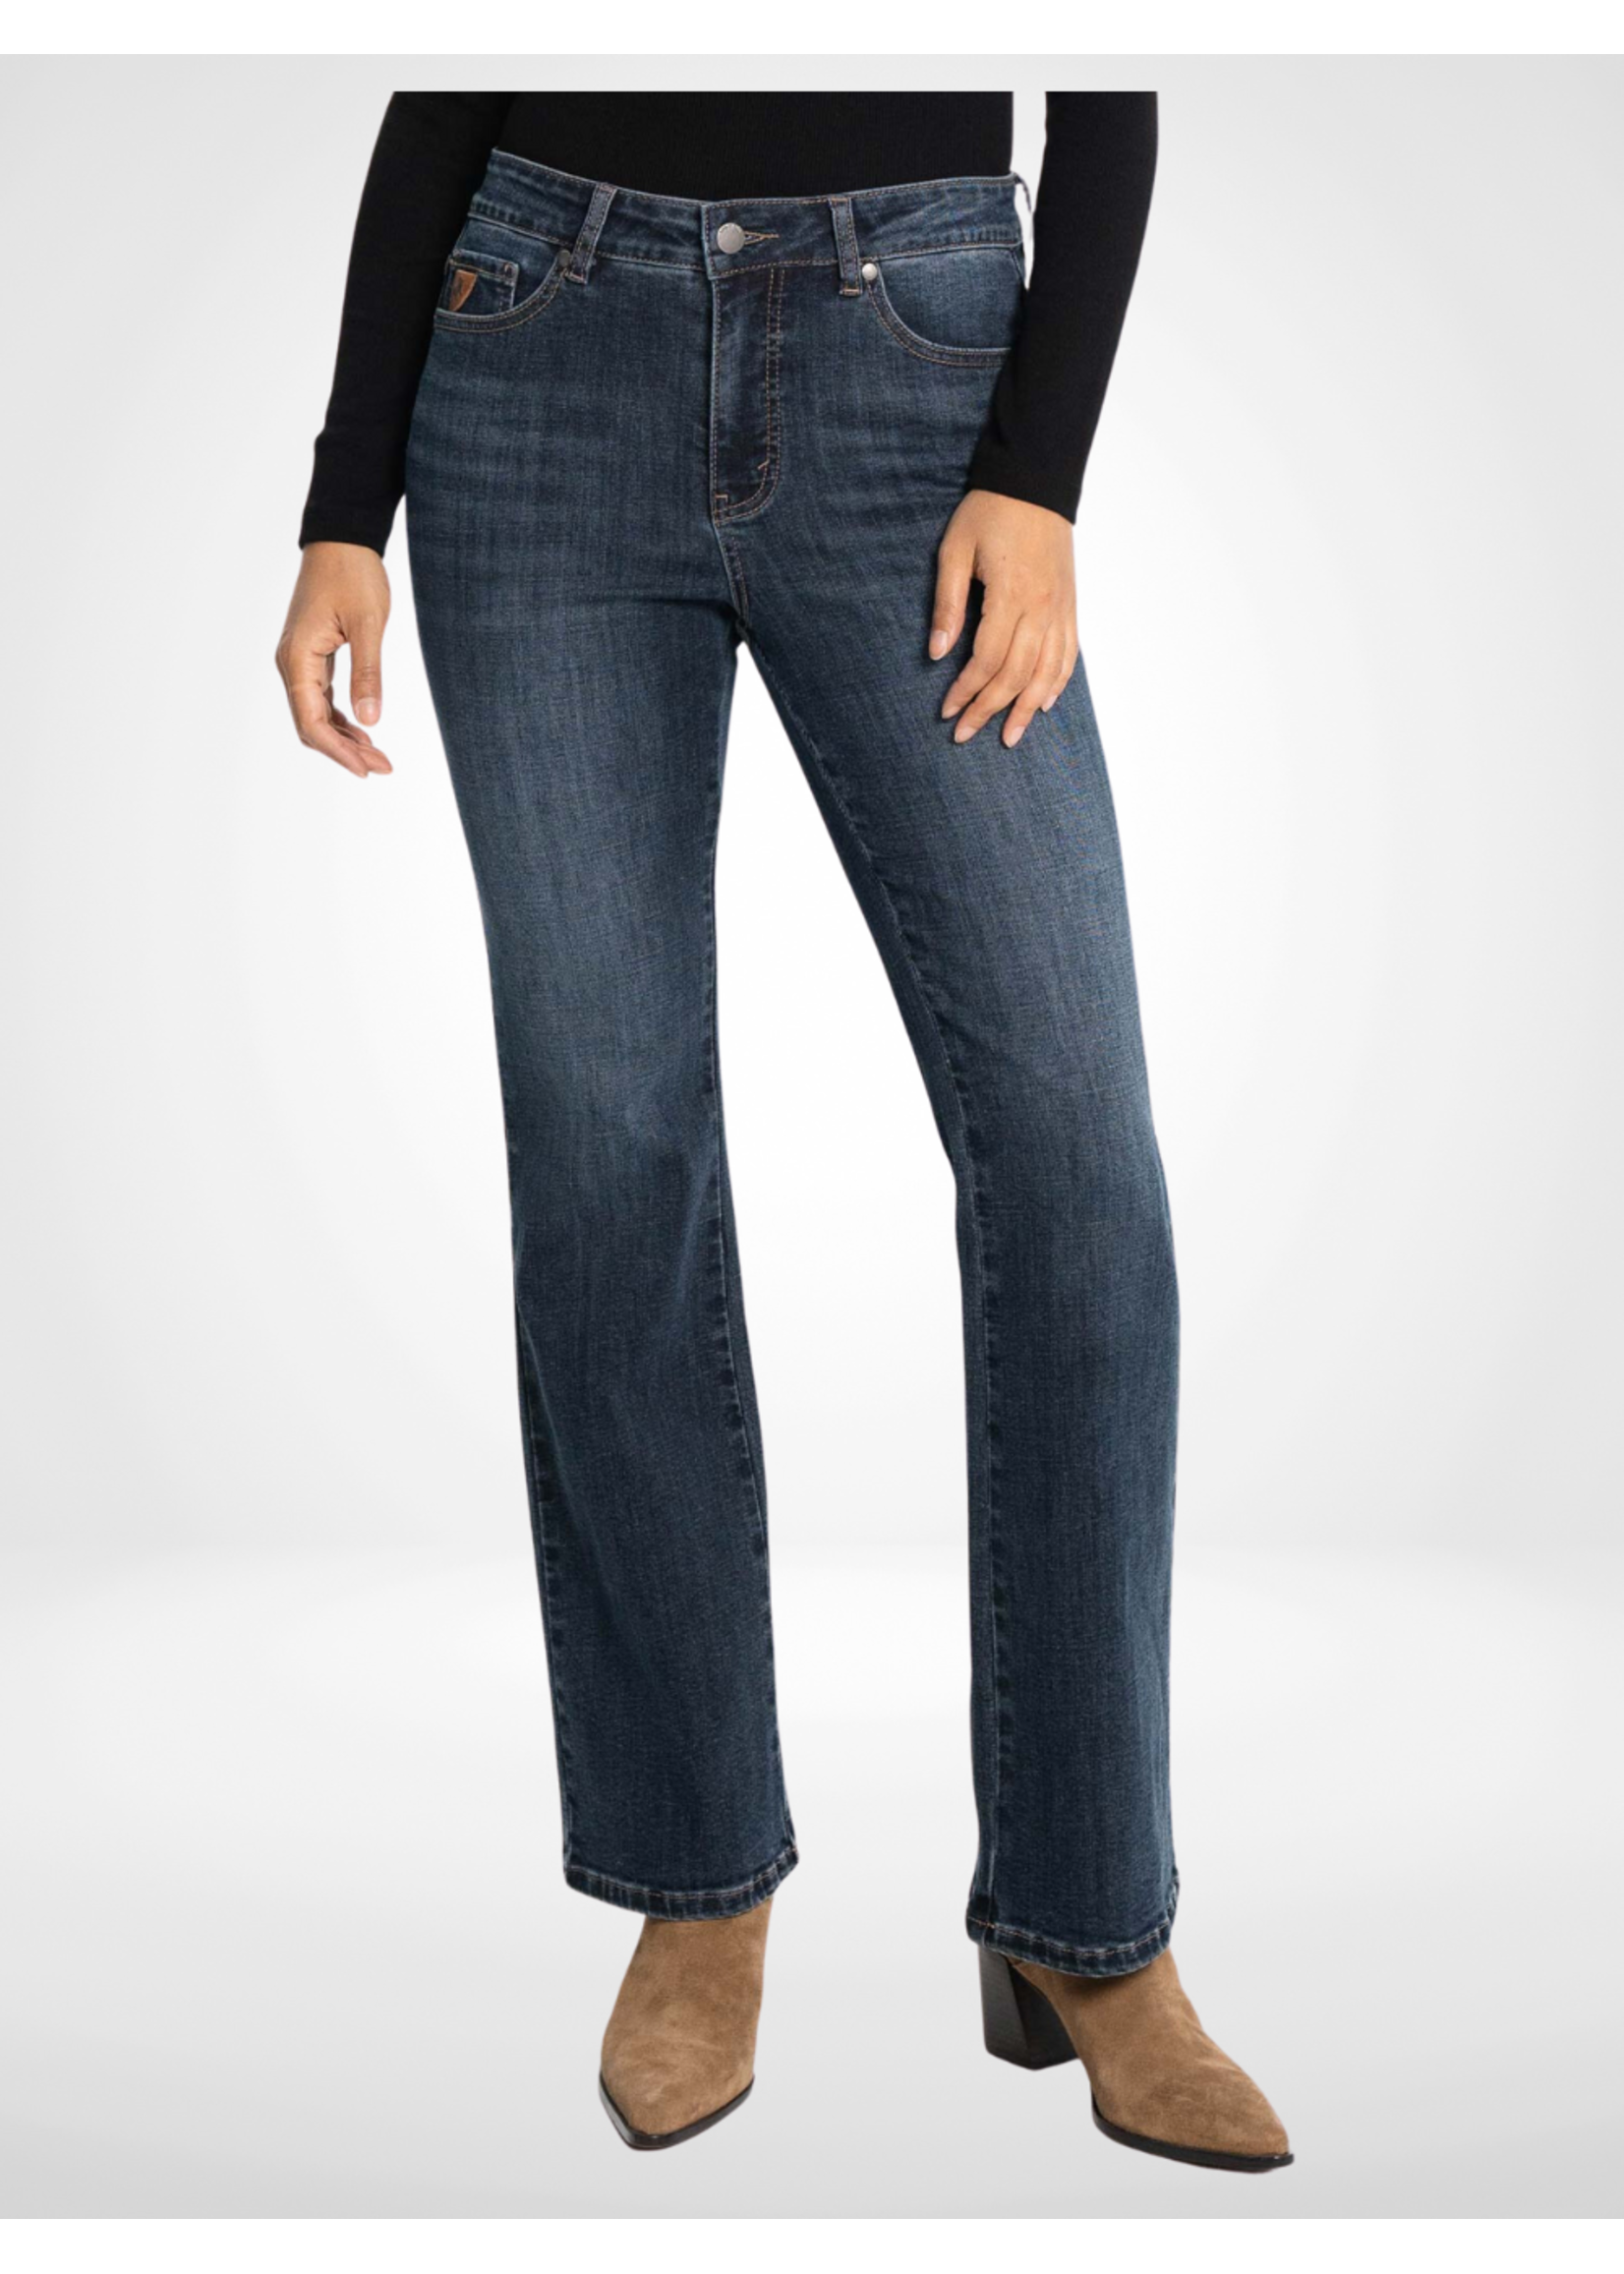 Lois Blackbull Apparel Erika Bootcut High Waist Jeans